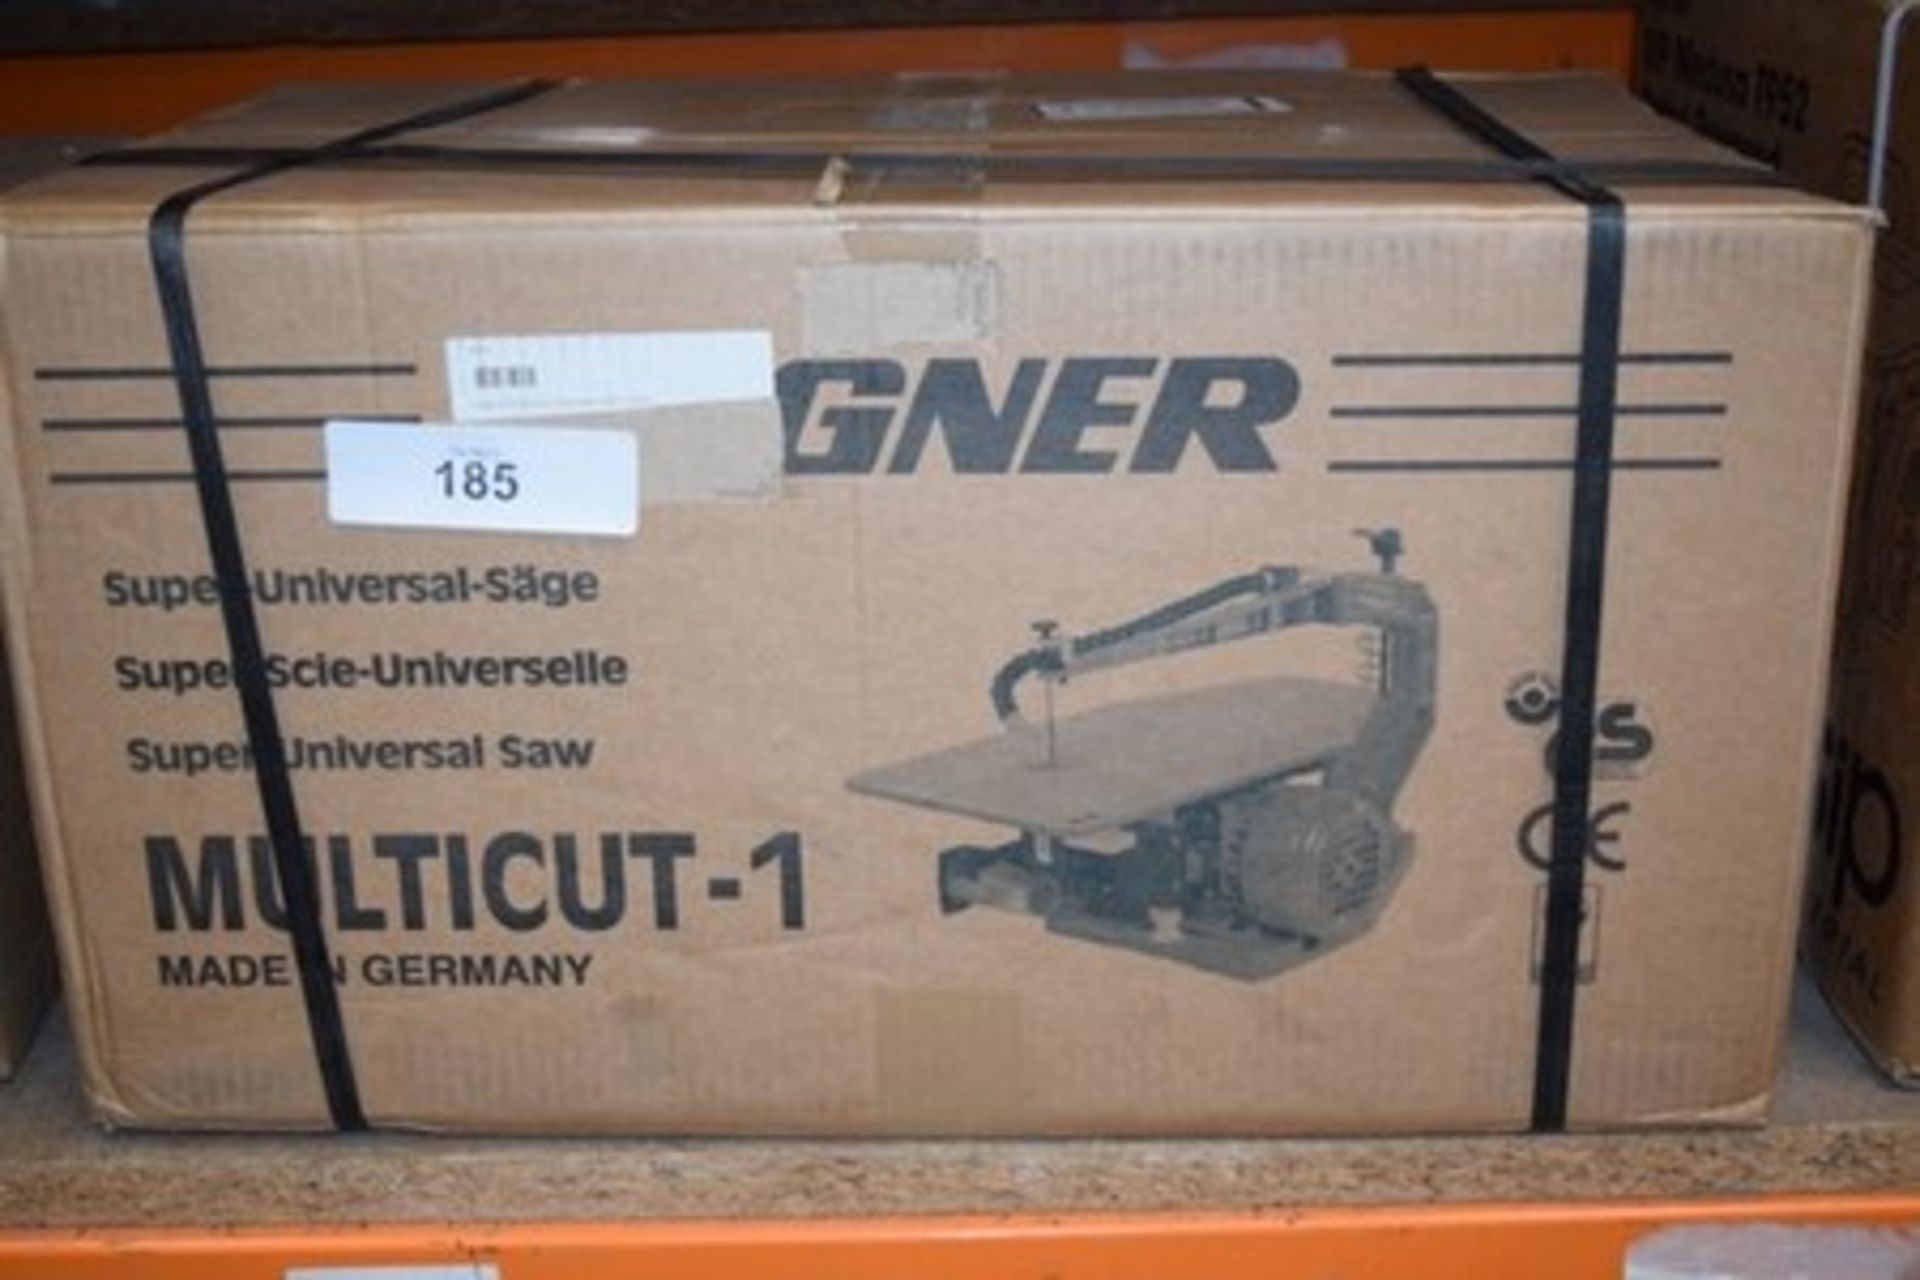 1 x Hegner Super universal saw, type multi cut 1 HM-1 - New in box (ES12)